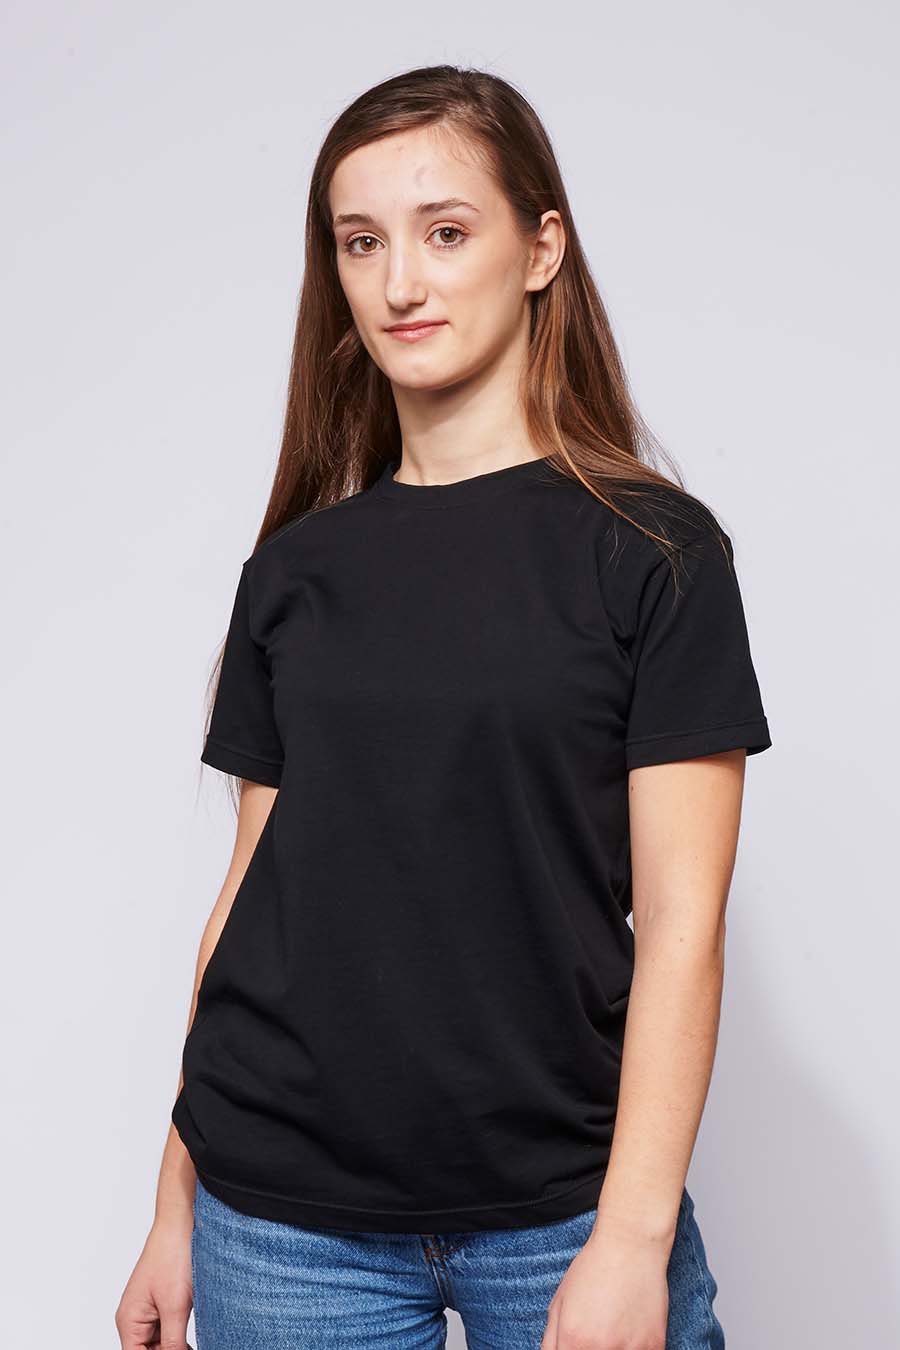 Tee-shirt Femme made in France en coton bio BRIGITTE noir - FIL ROUGE